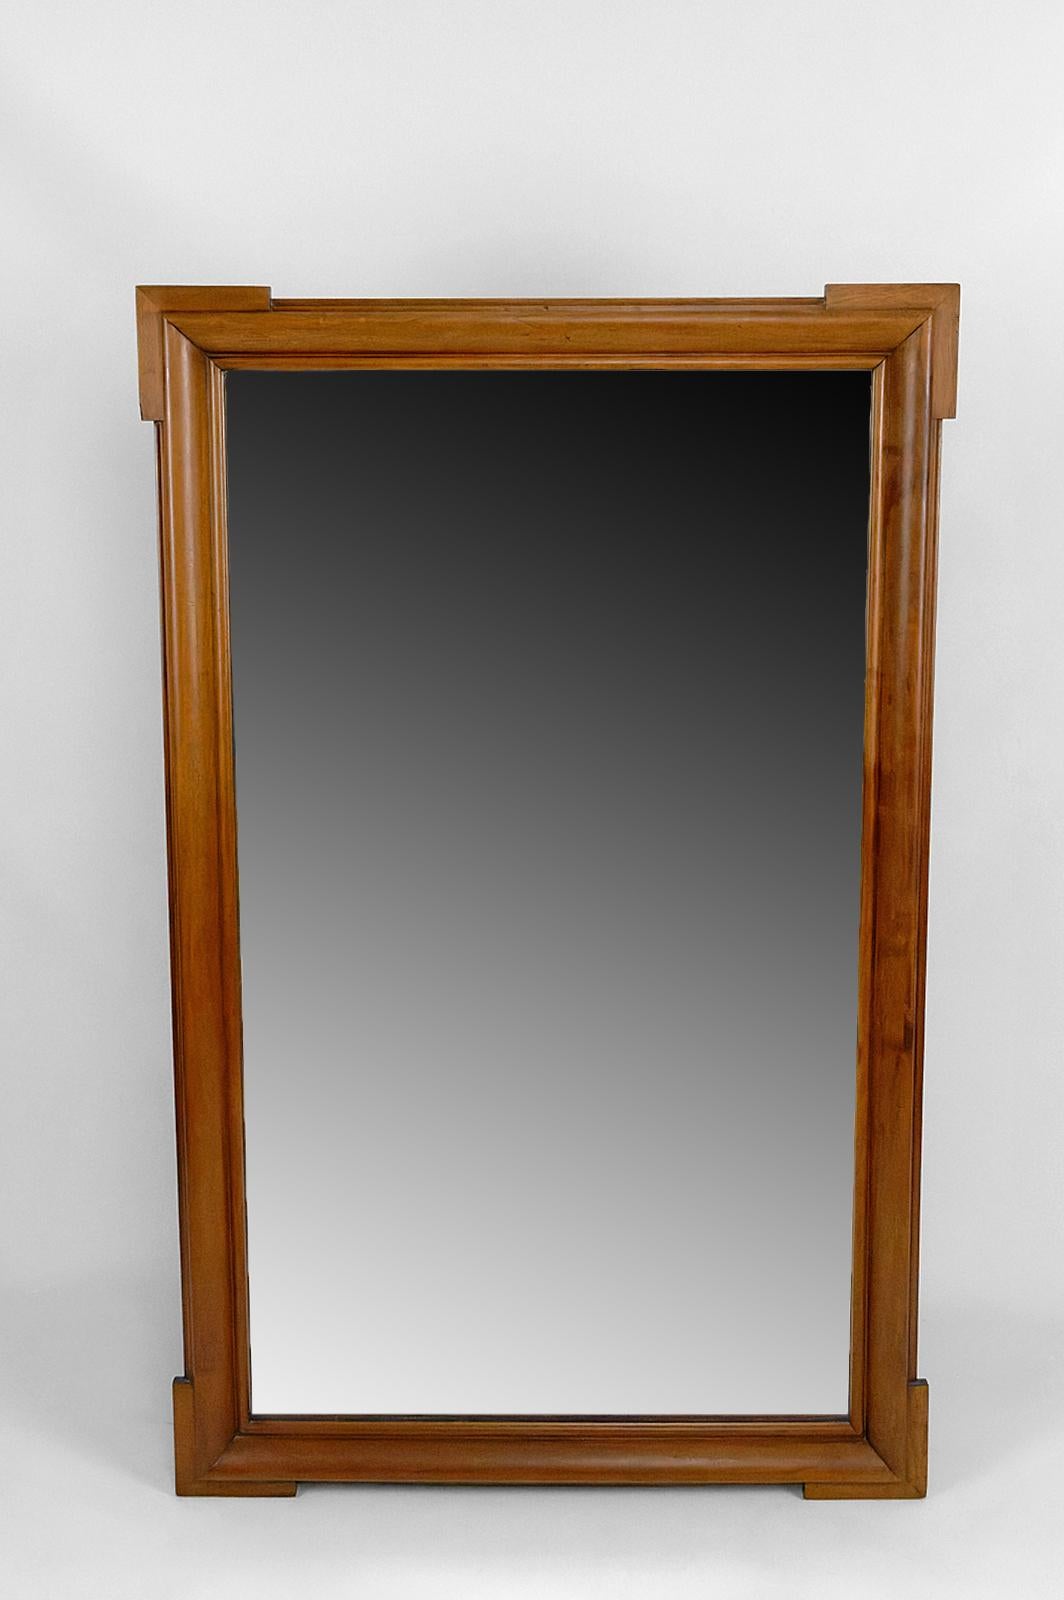 Walnut mirror.
Napoleon III period
France, circa 1870
Good condition.

Dimensions:
height 127 cm
width 81 cm
depth 8 cm